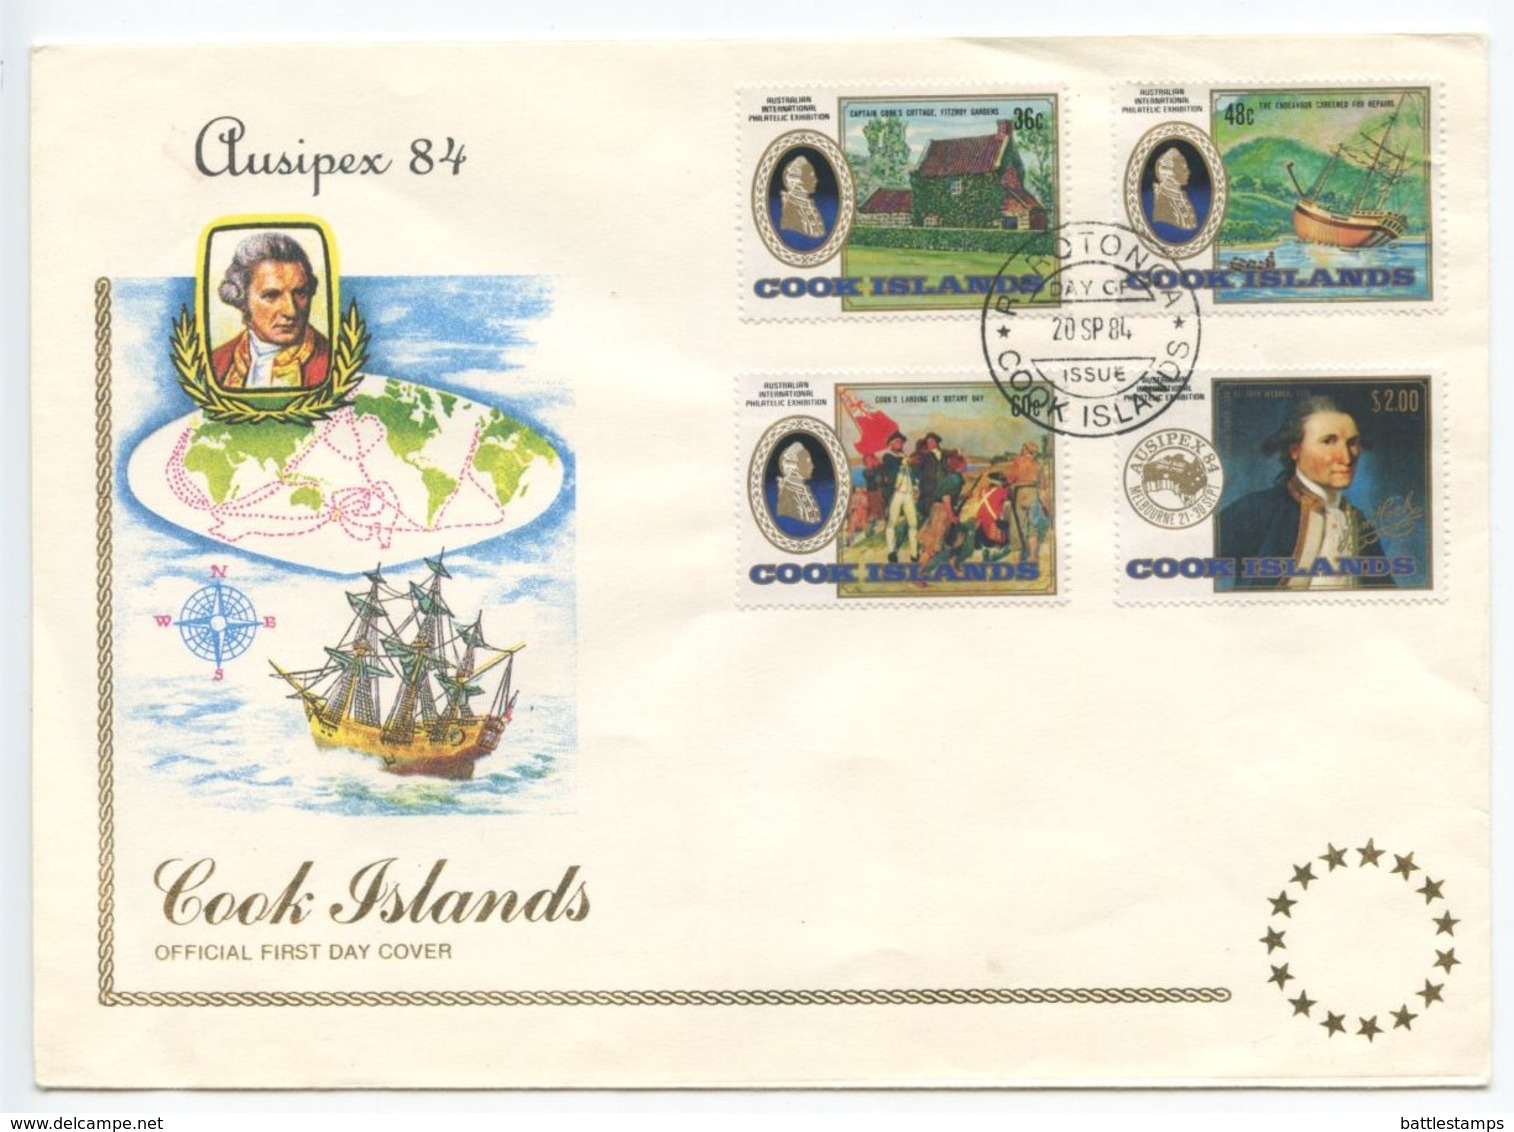 Cook Islands 1984 FDC Scott 829-832 Ausipex '84 Philatelic Exhibition - Cook Islands